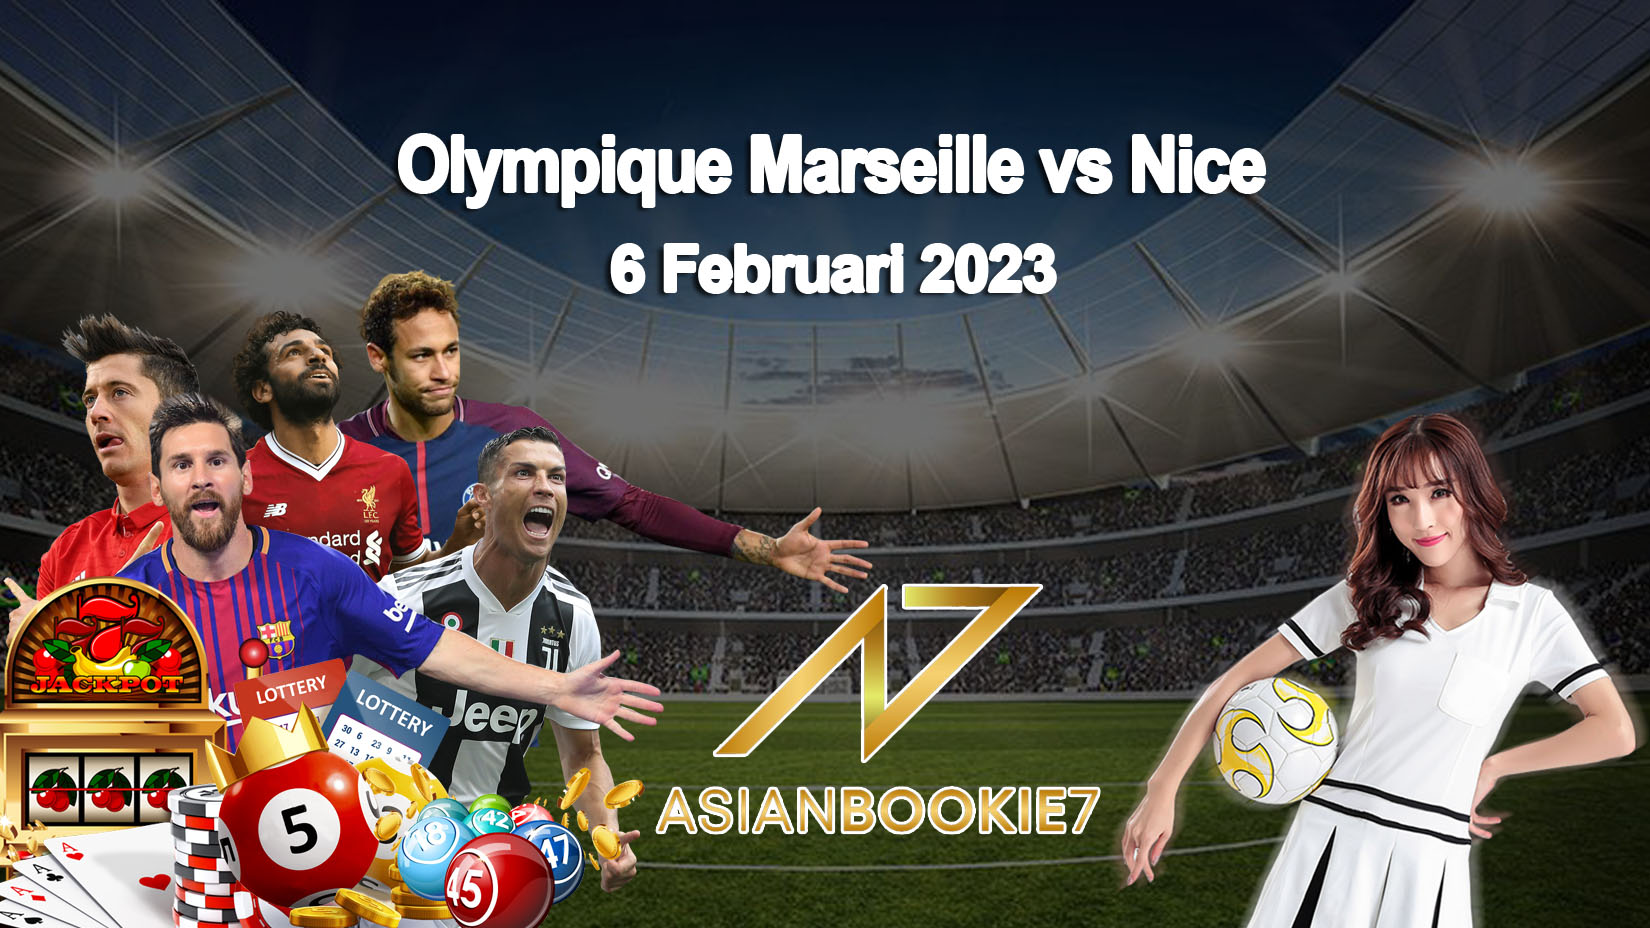 Prediksi Olympique Marseille vs Nice 6 Februari 2023